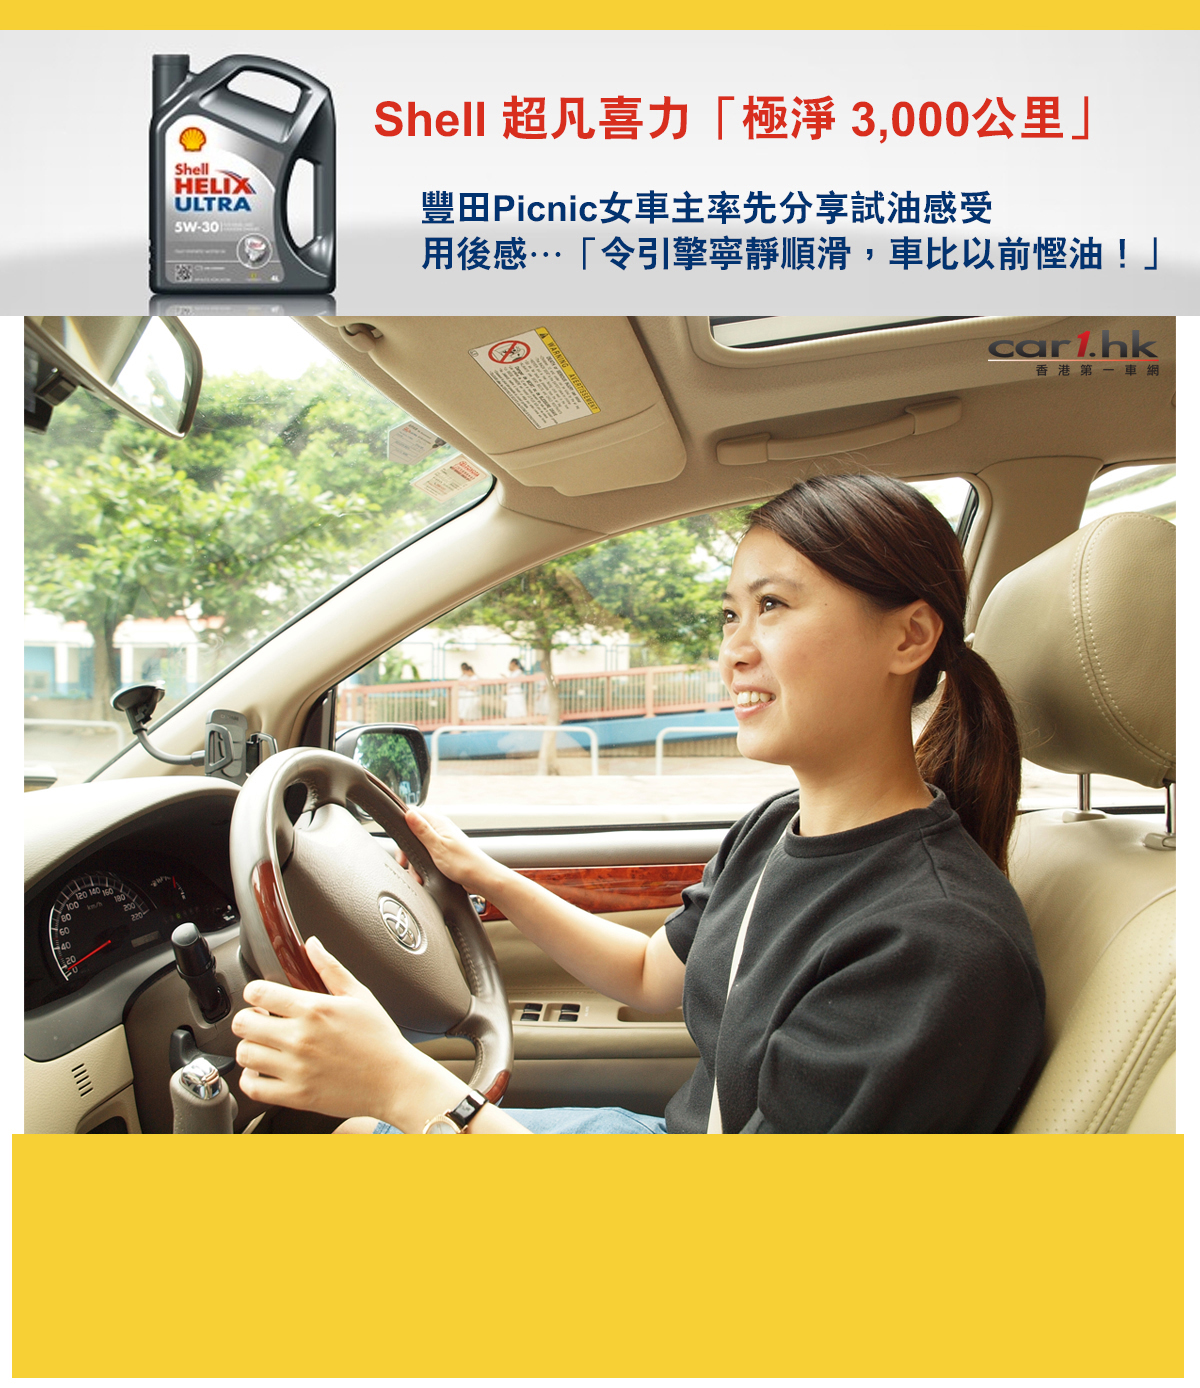 Shell 超凡喜力「極淨 3,000公里」豐田Picnic女車主率先分享試油感受
用後感…「令引擎寧靜順滑，車比以前慳油！」
